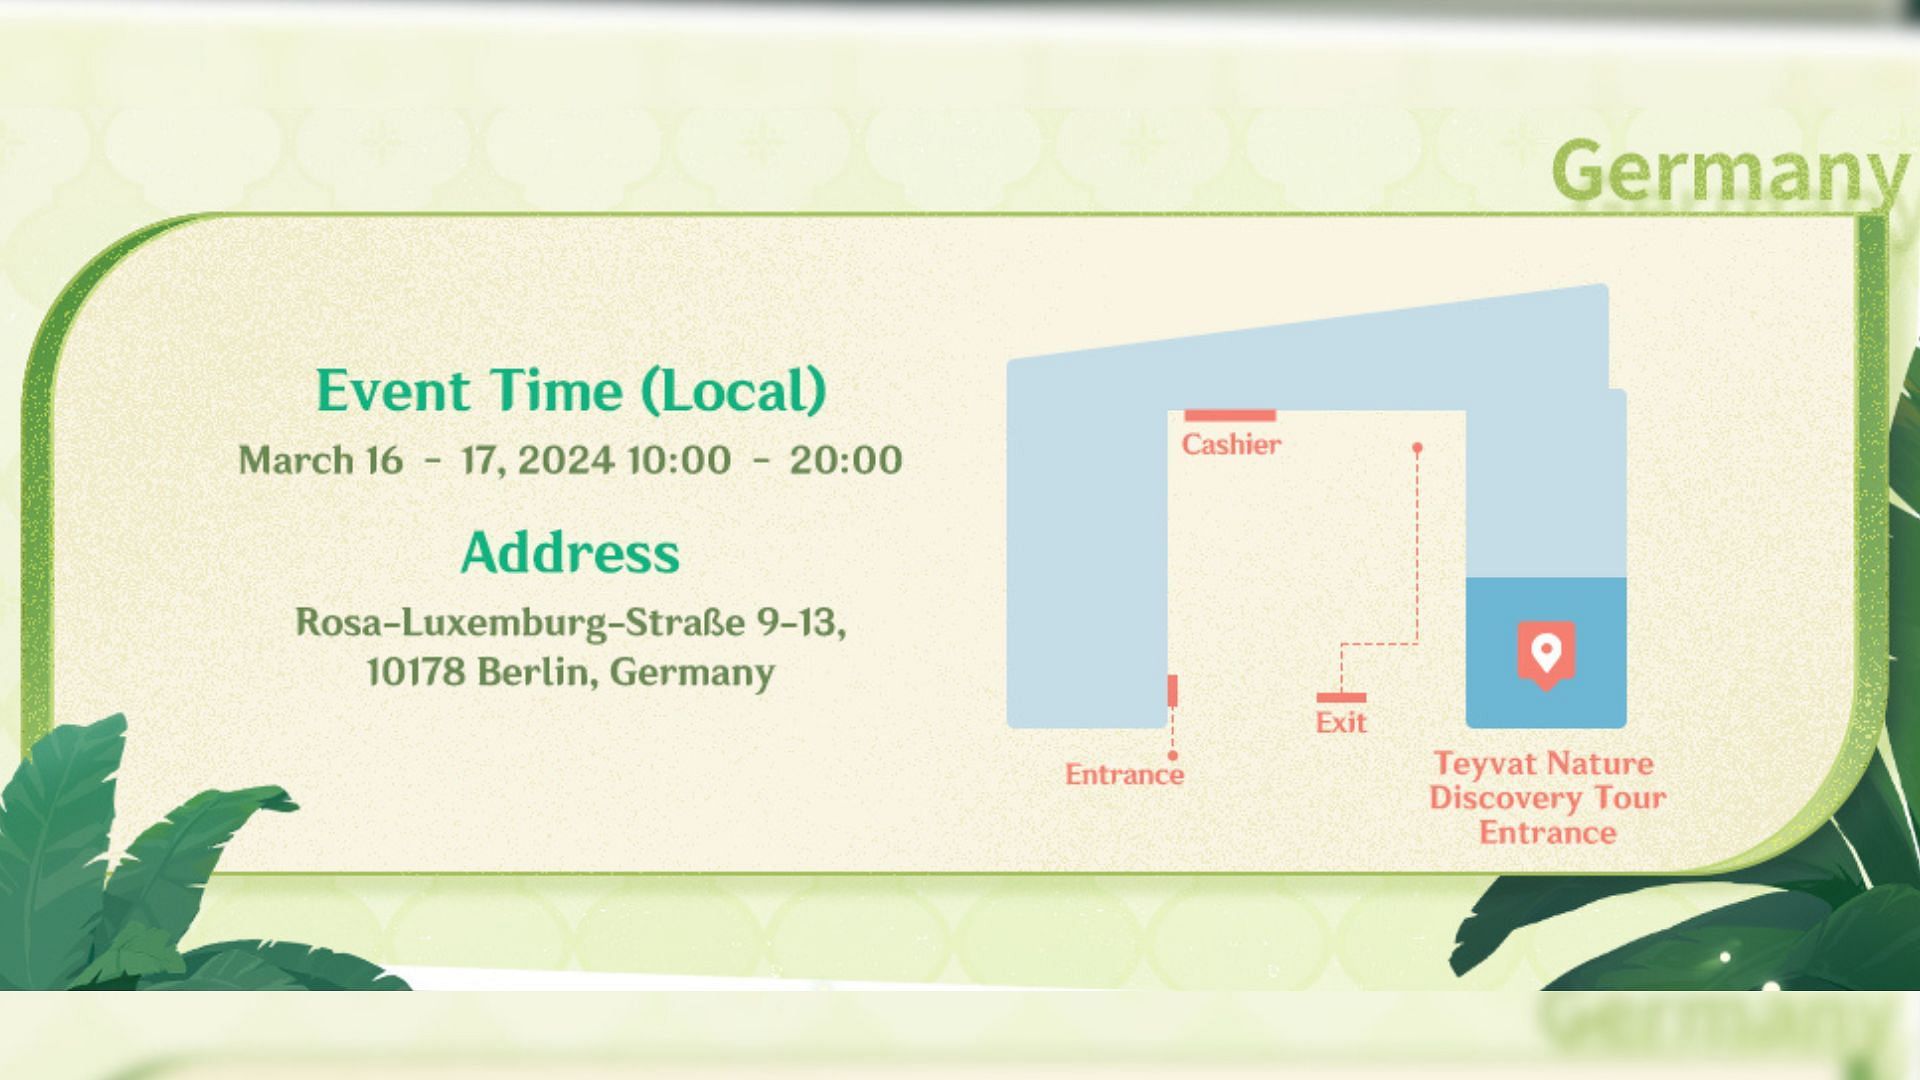 Germany event time and address (Image via HoYoverse)